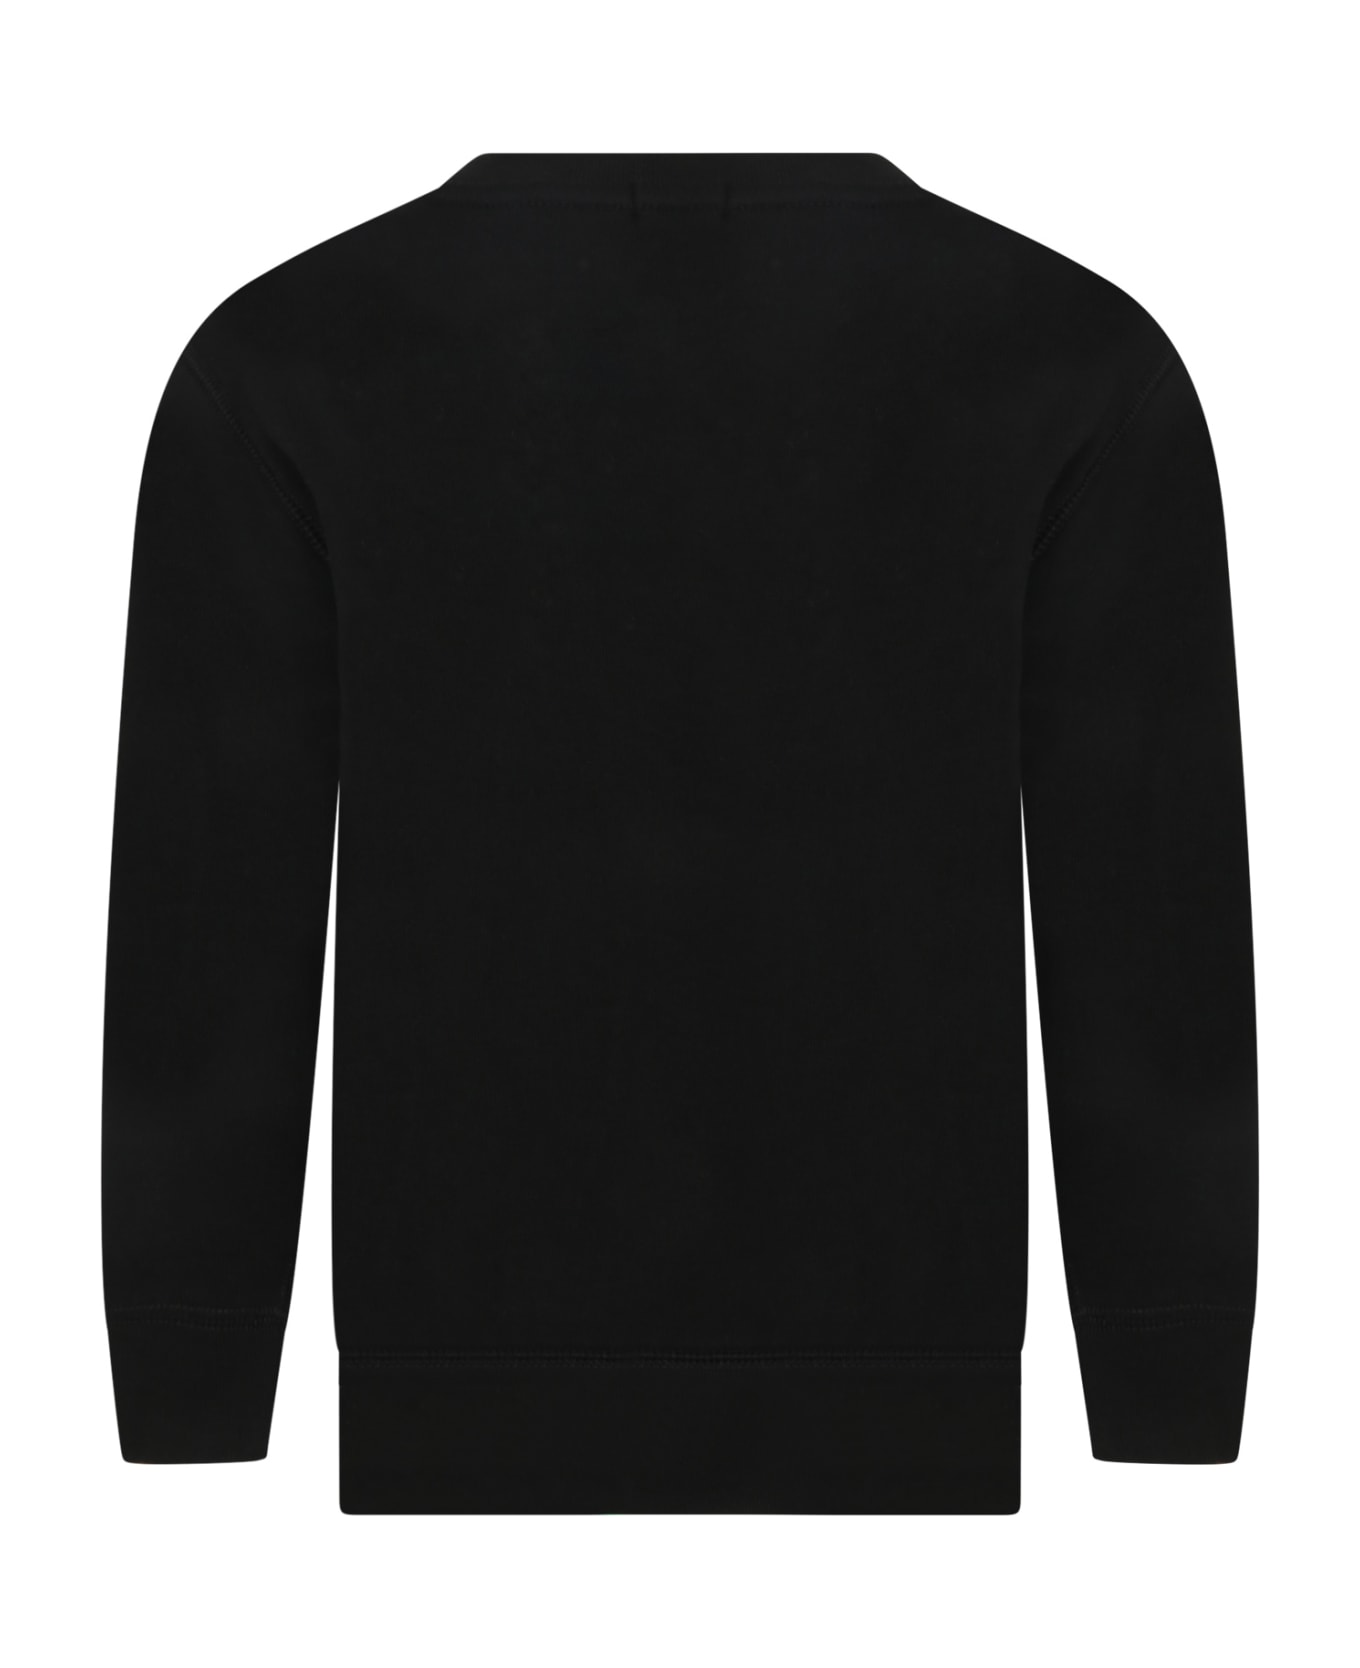 Ralph Lauren Black Sweatshirt For Boy With Pony Logo - Black